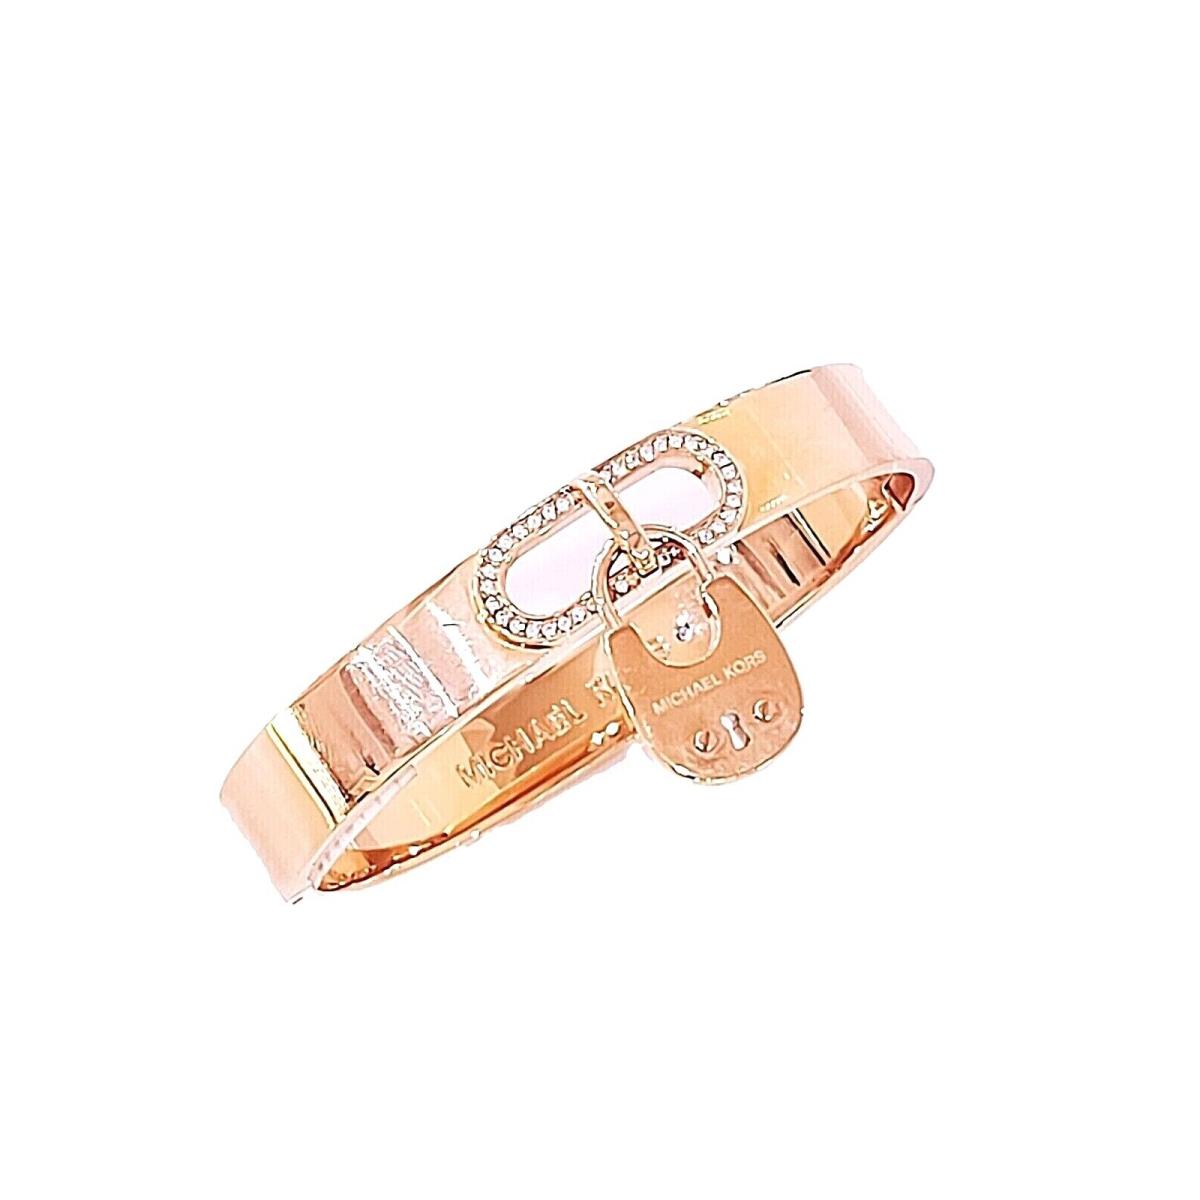 Michael Kors Brand Rose Gold Pave Crystals Padlock Charm Bangle Bracelet